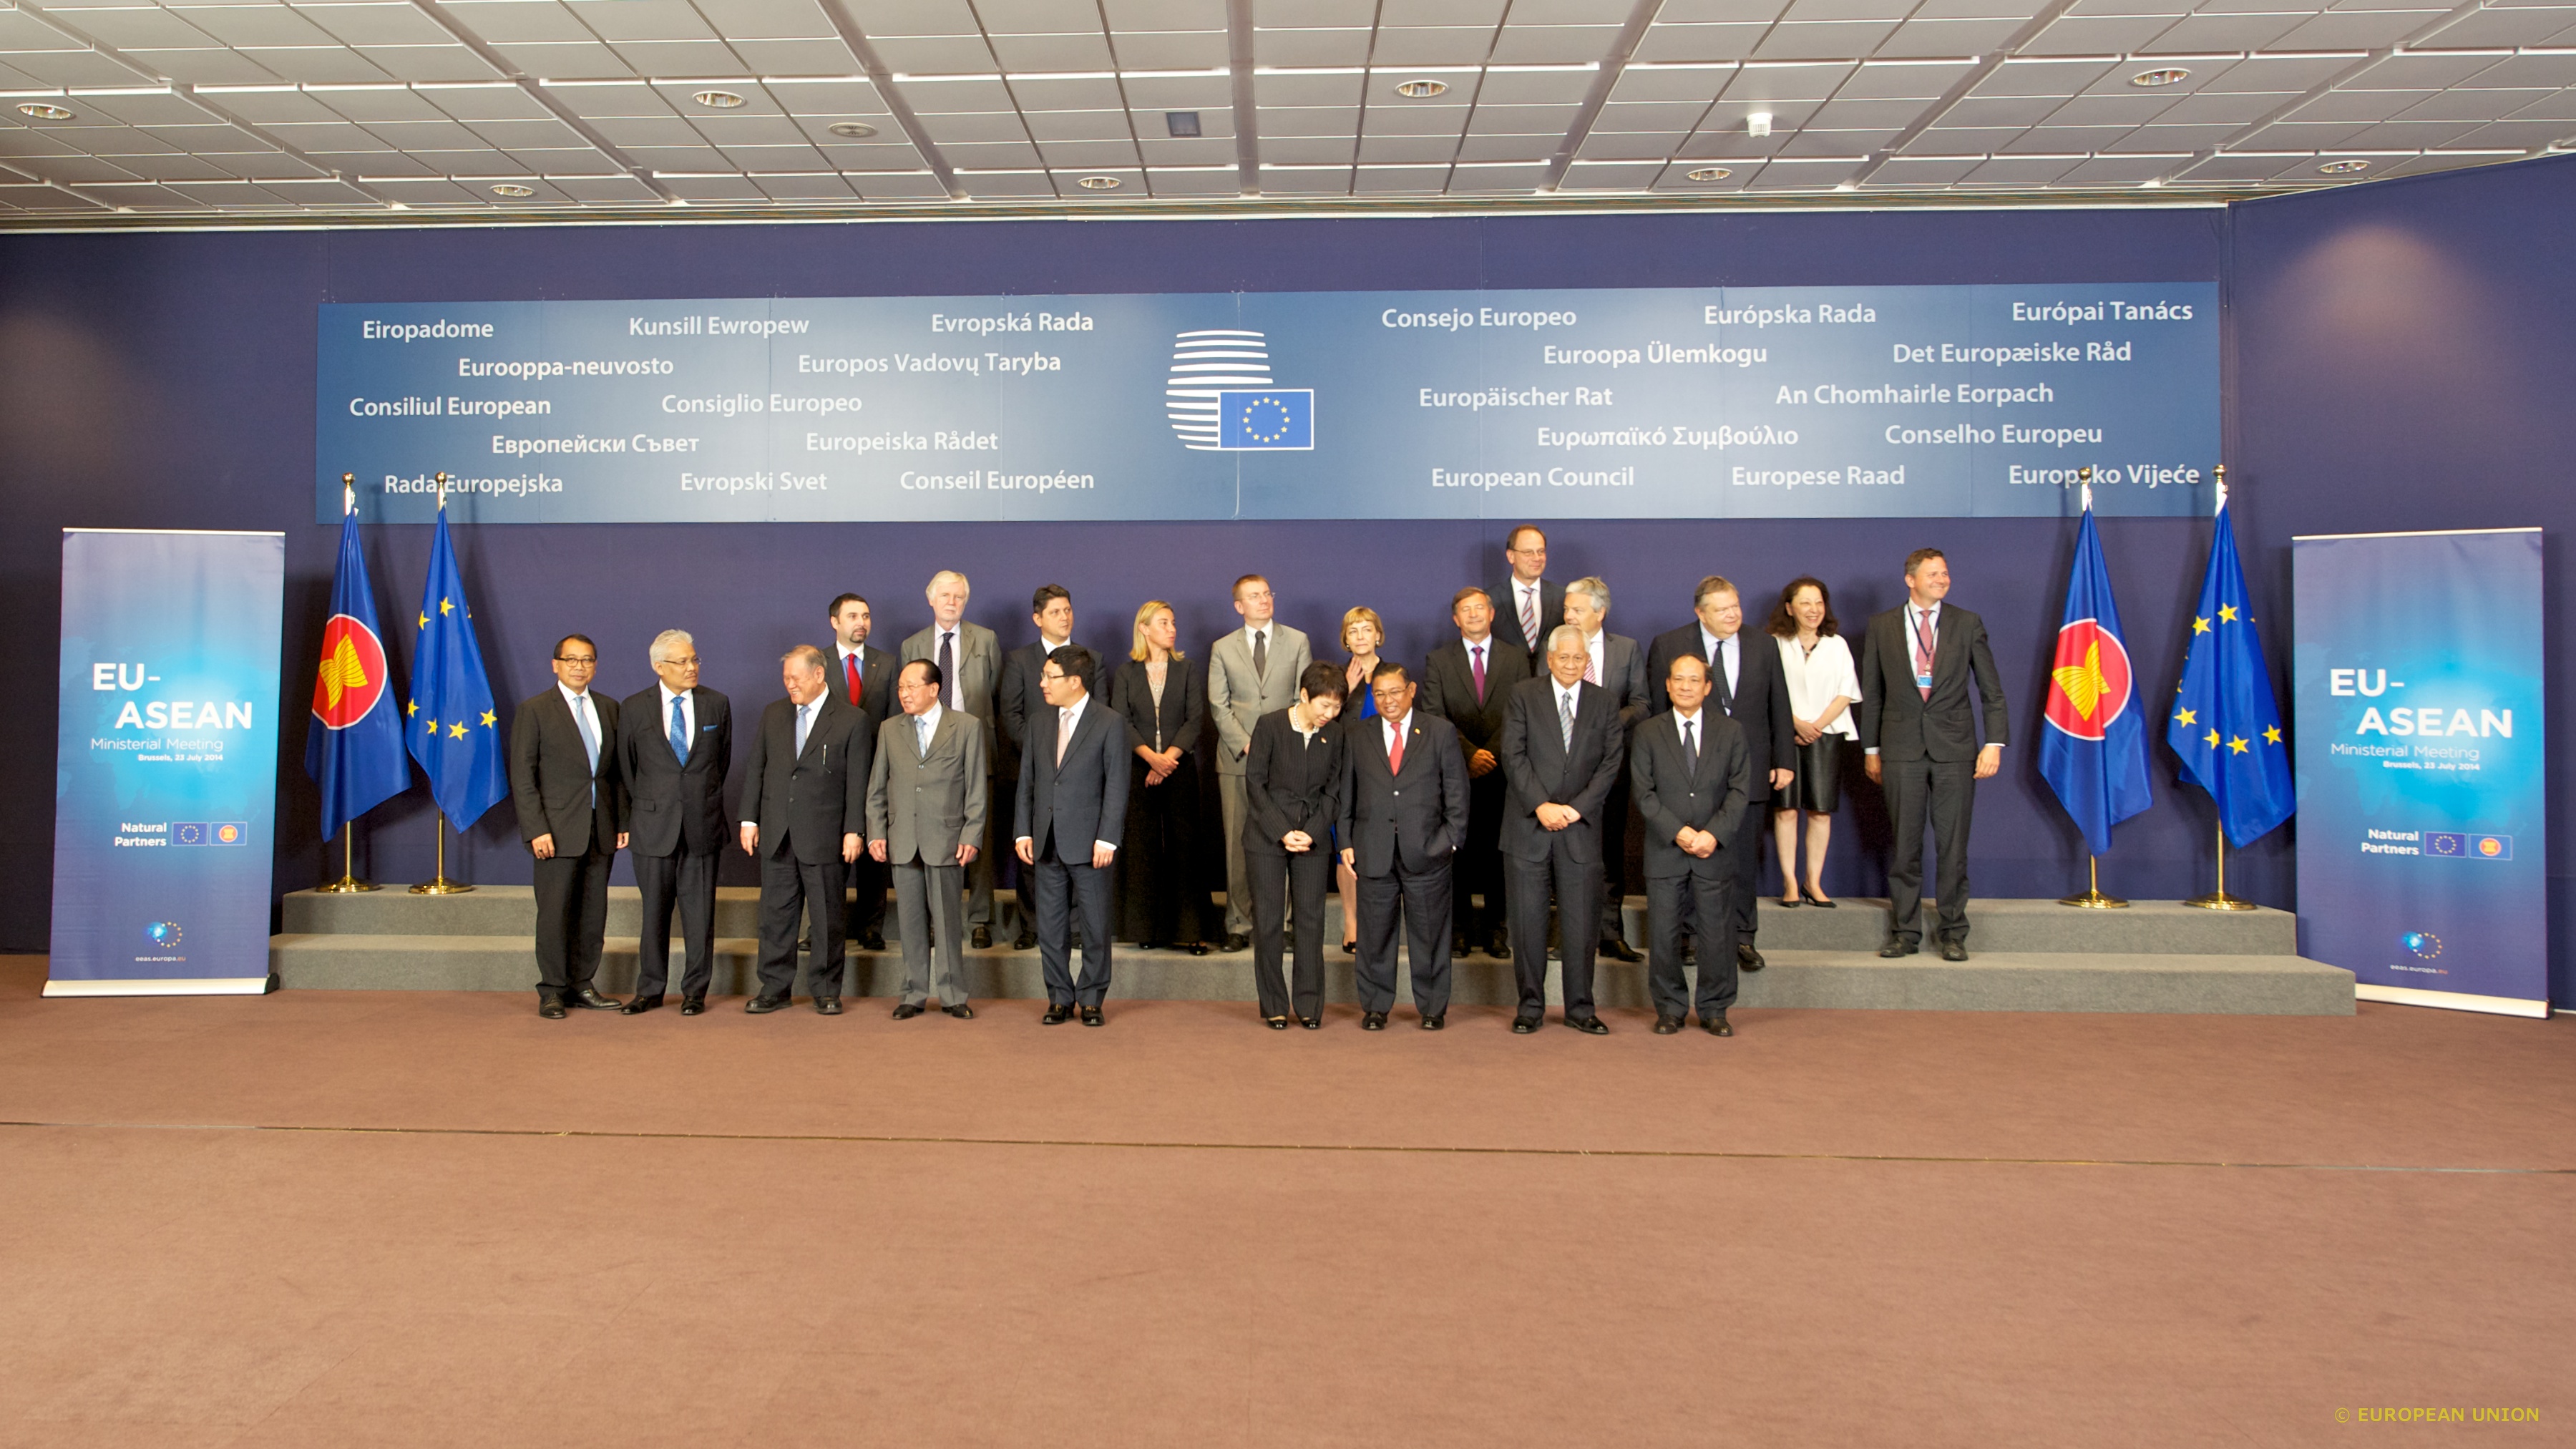 EU-ASEAN MEETING